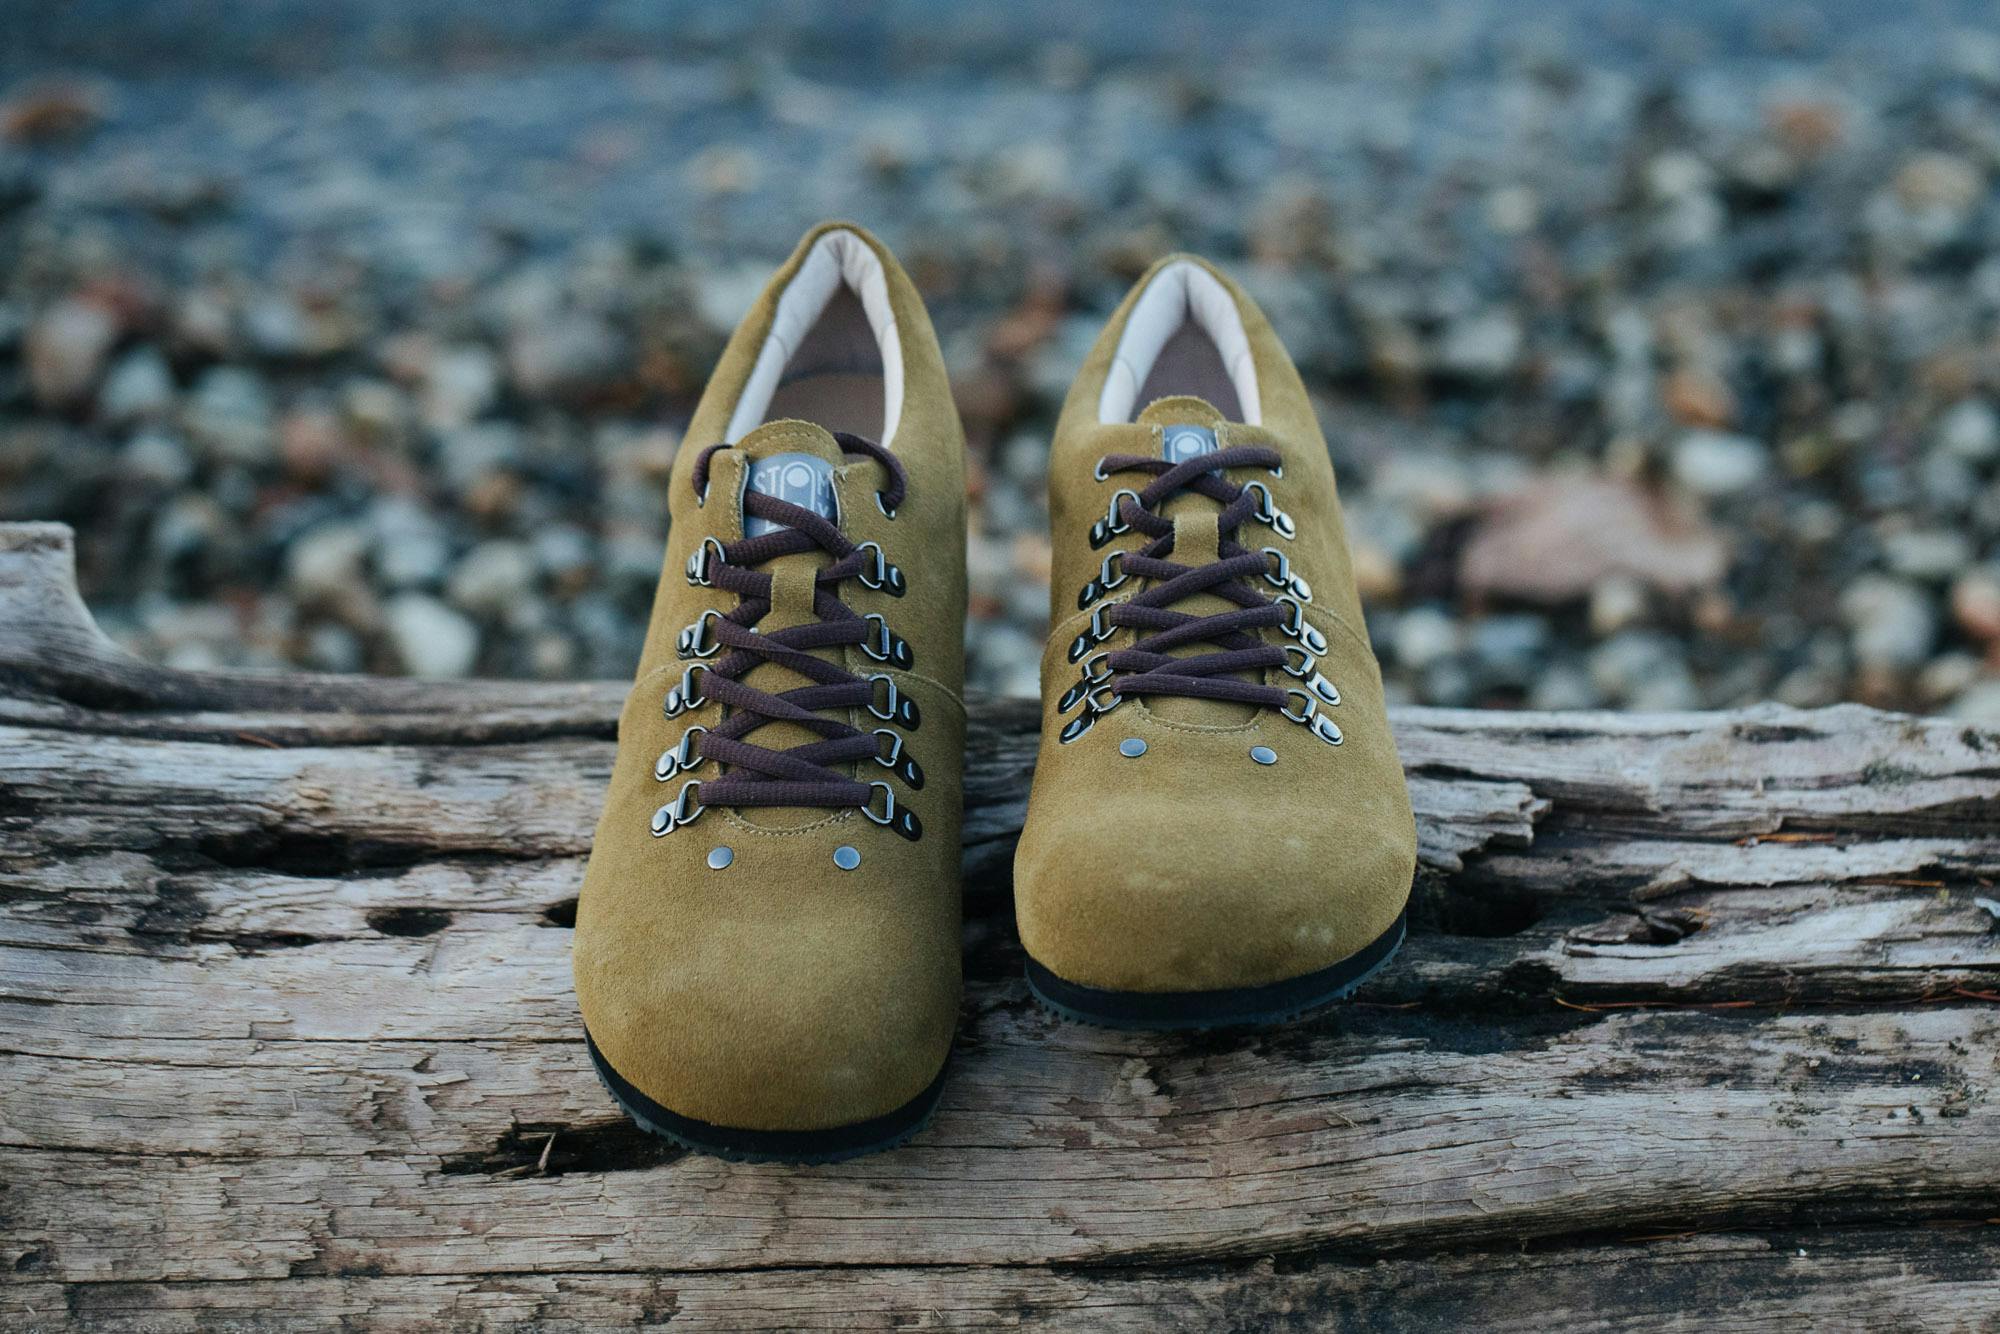 Stomplox Slack Shoe Review: Lacing Up Adventure